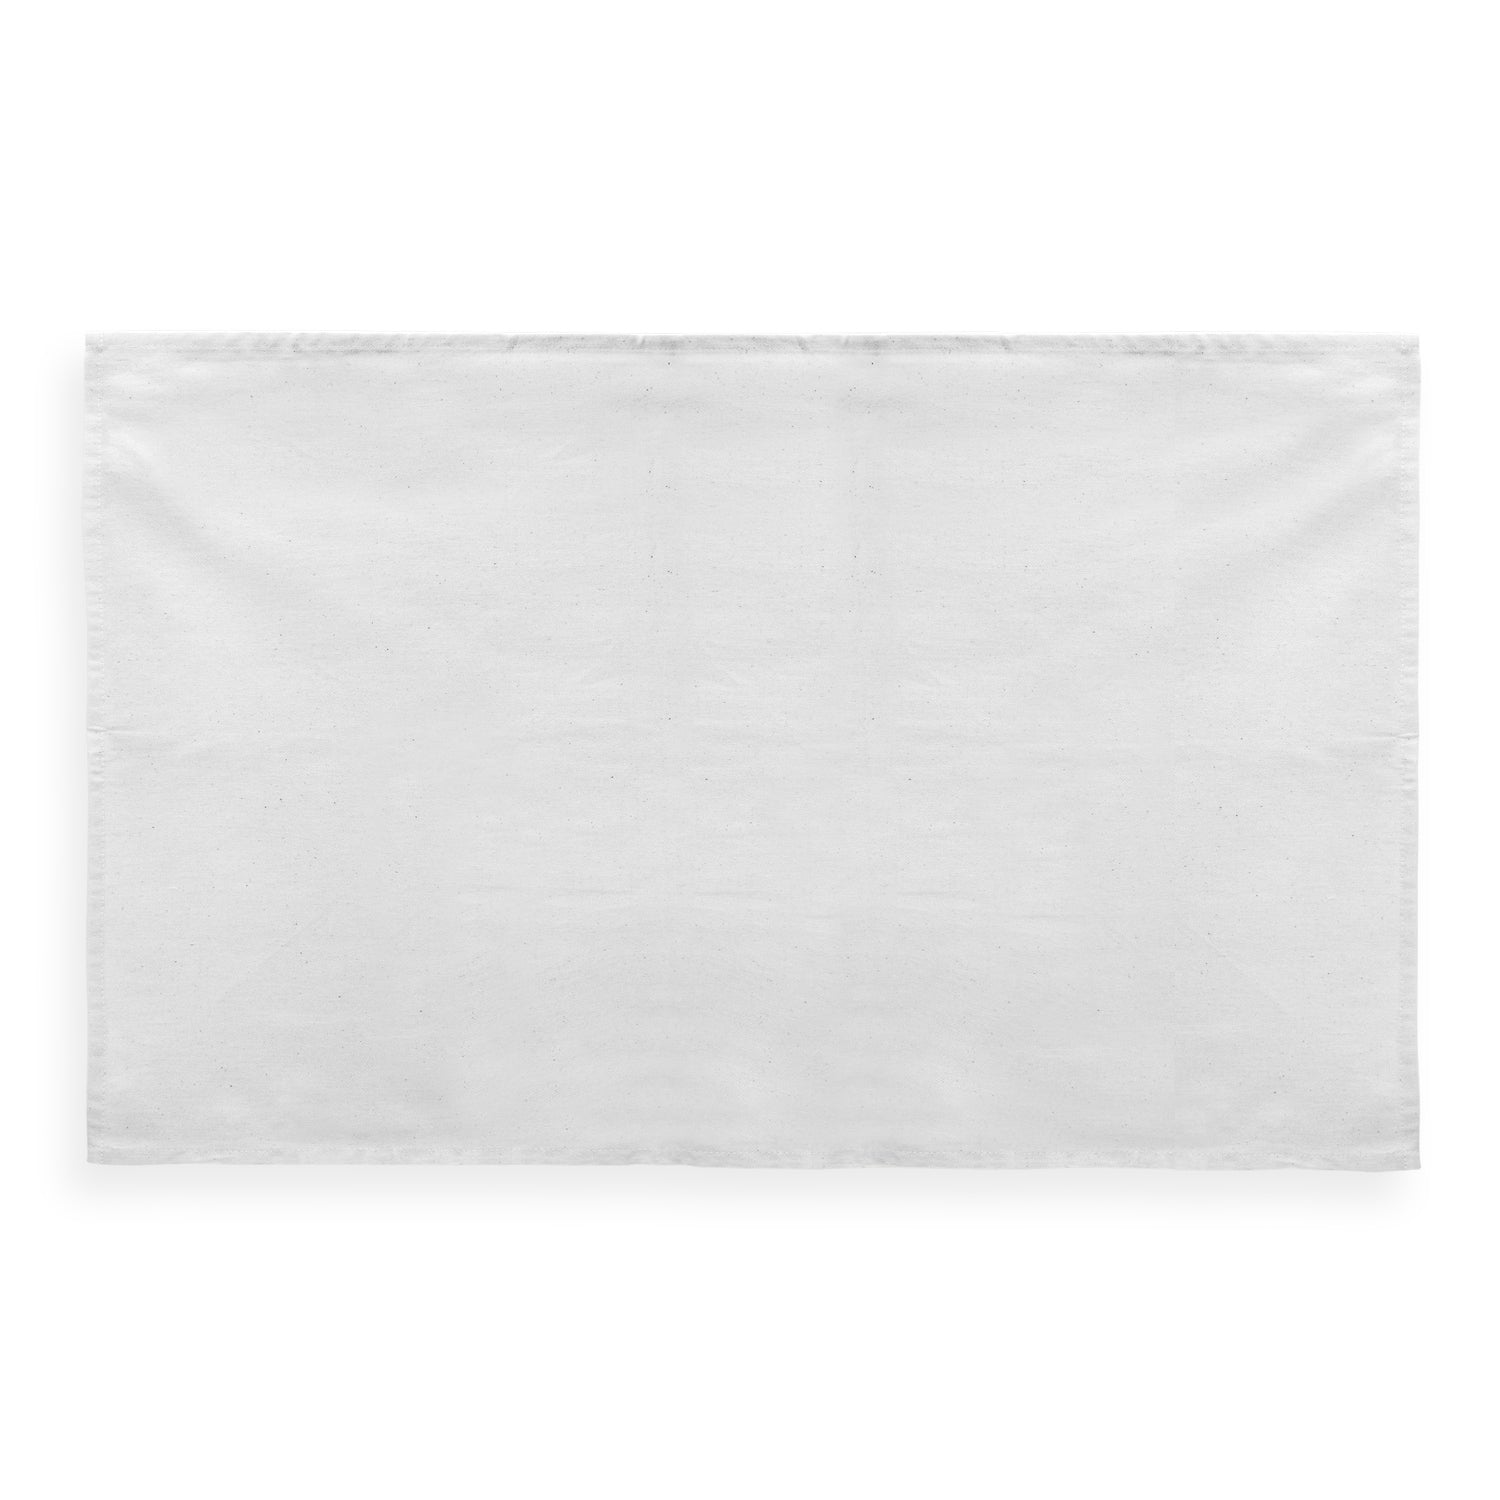 Bistro Cotton Tea Towel [115914]